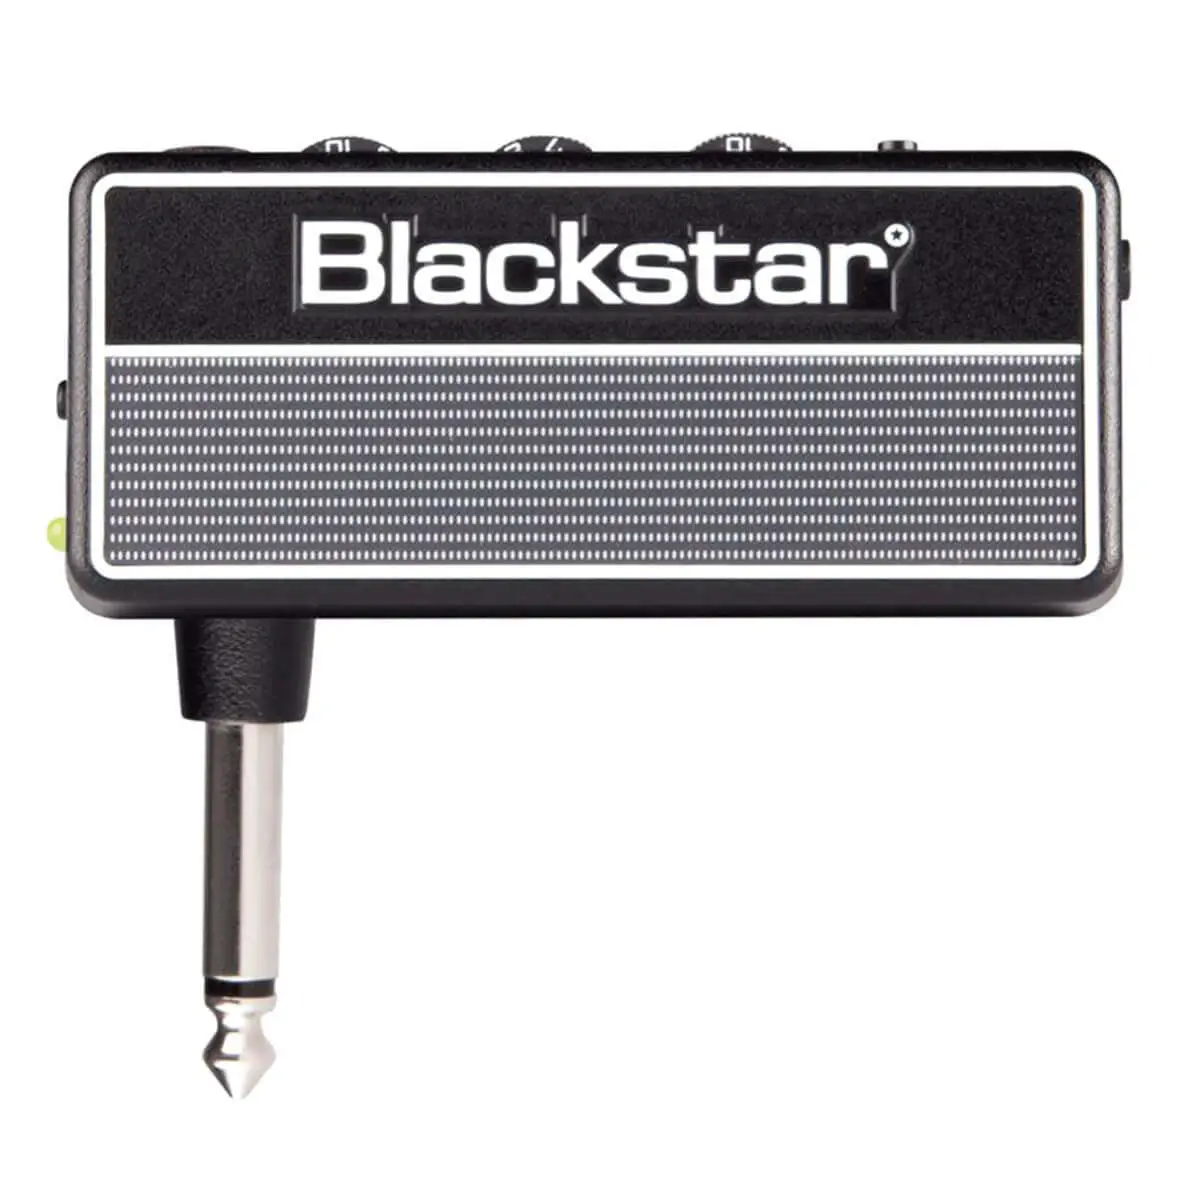 Blackstar Electric Guitar Headphone Amplifier